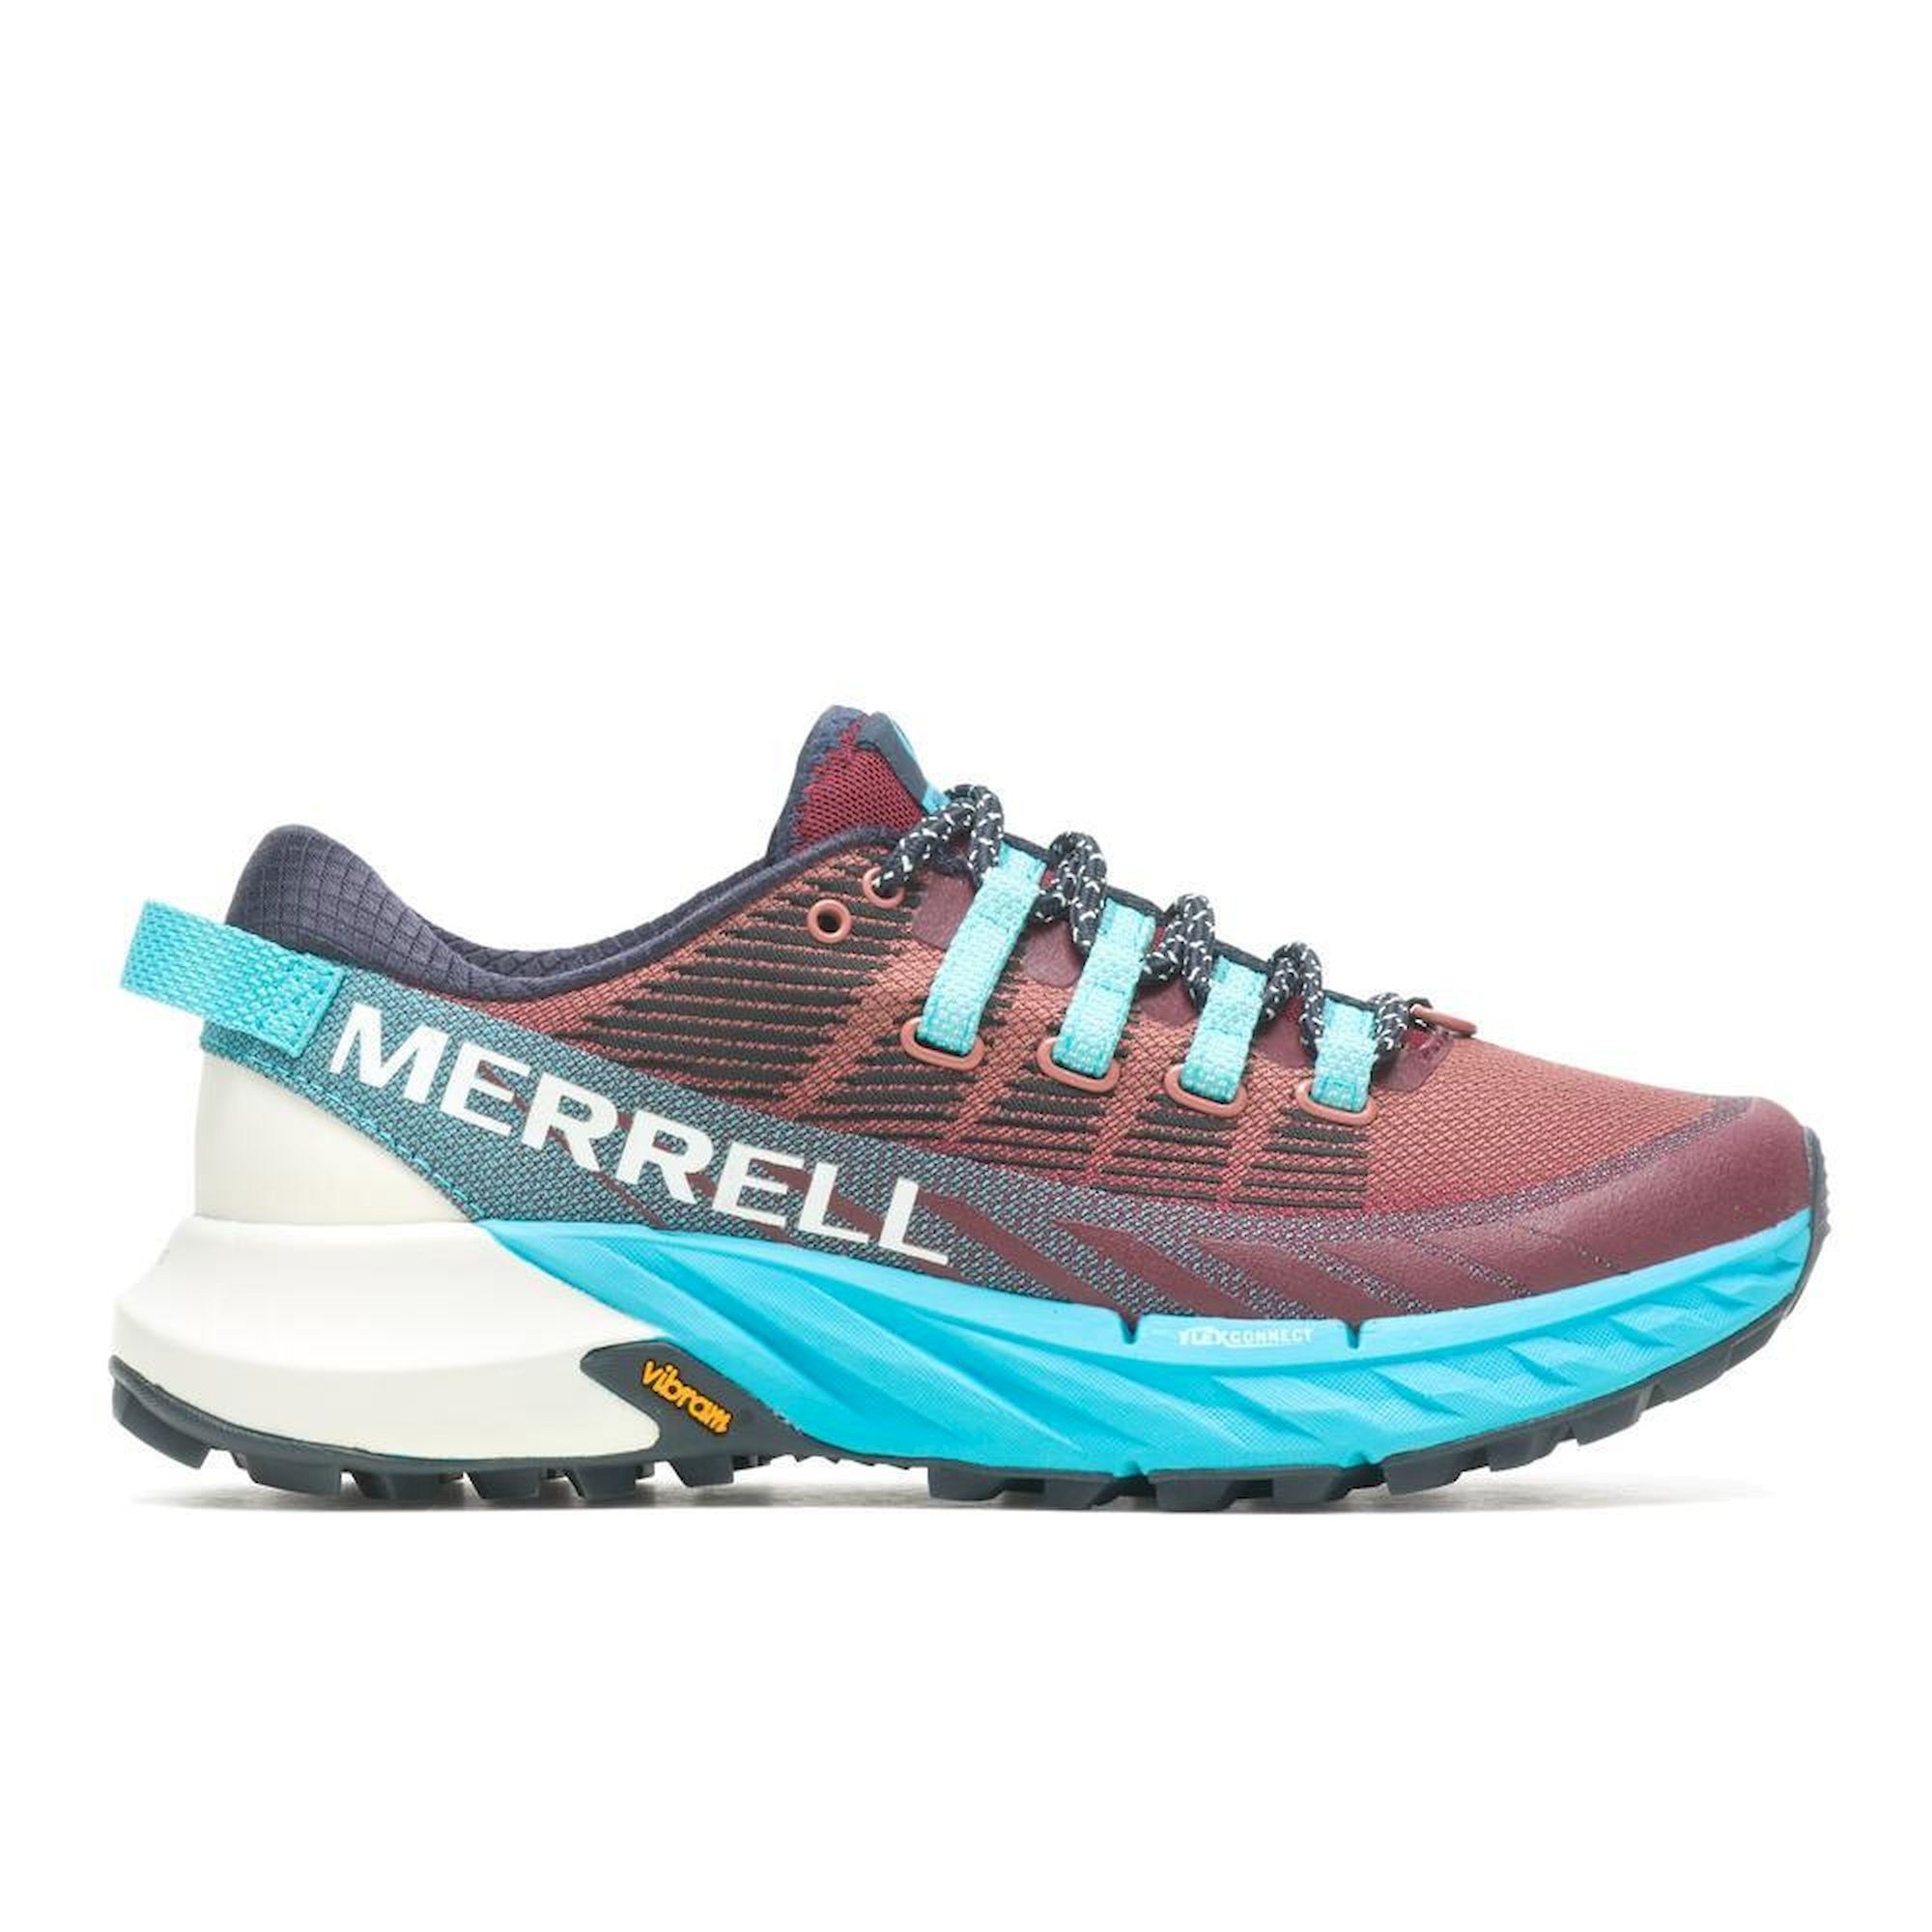 Merrell Agility Peak 4 - Trail running shoes - Women's